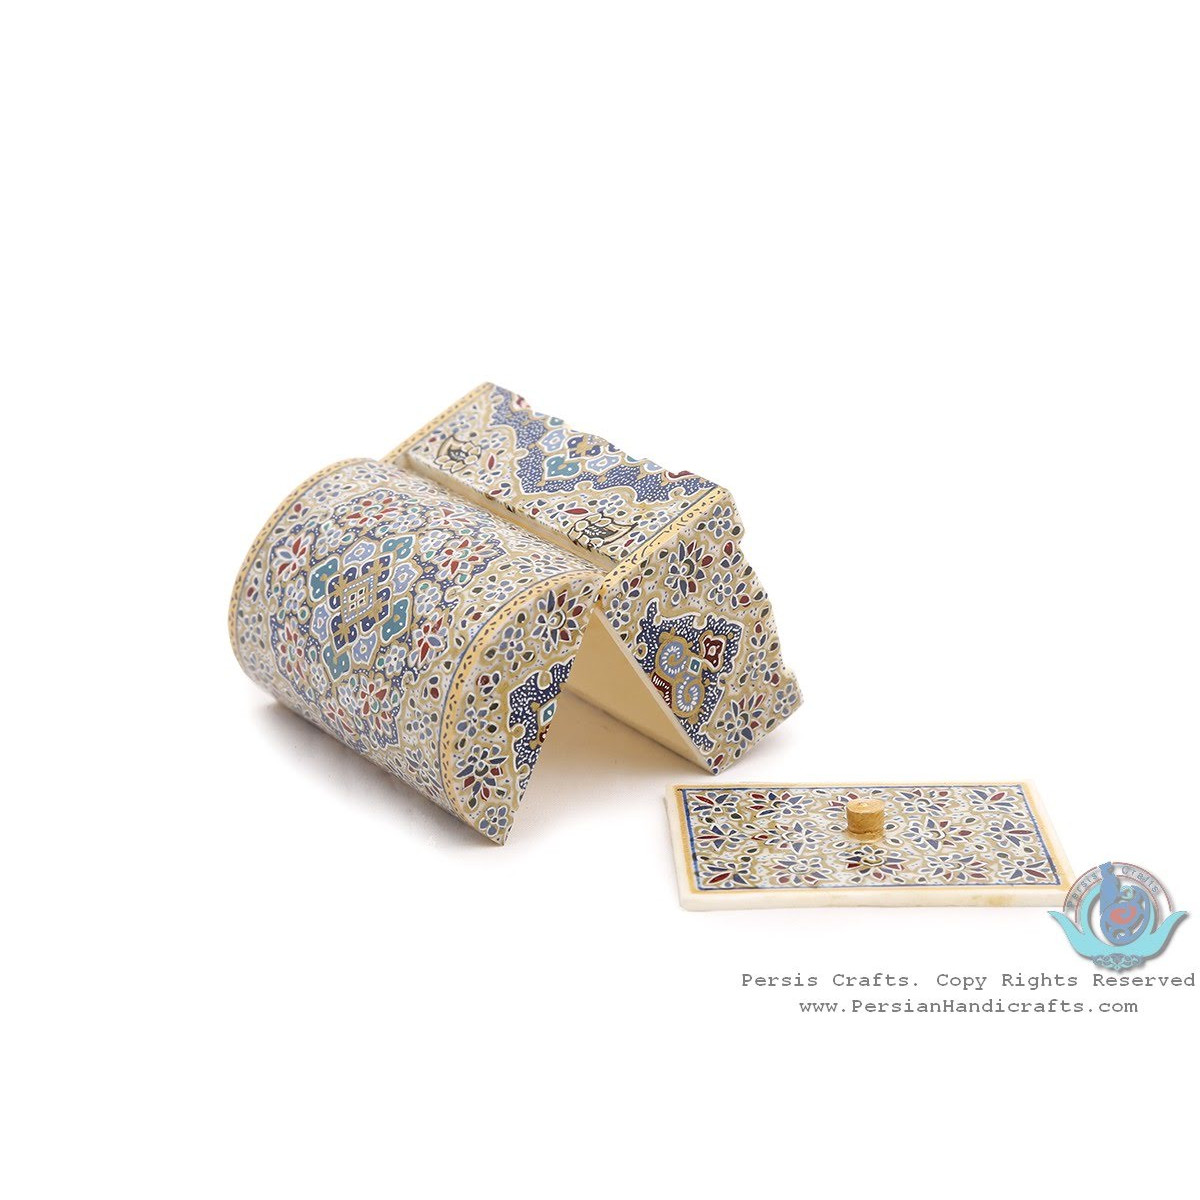 Premium Tazhib Miniature Round Trunk Shape Jewelry Box - HM3920-Persian Handicrafts